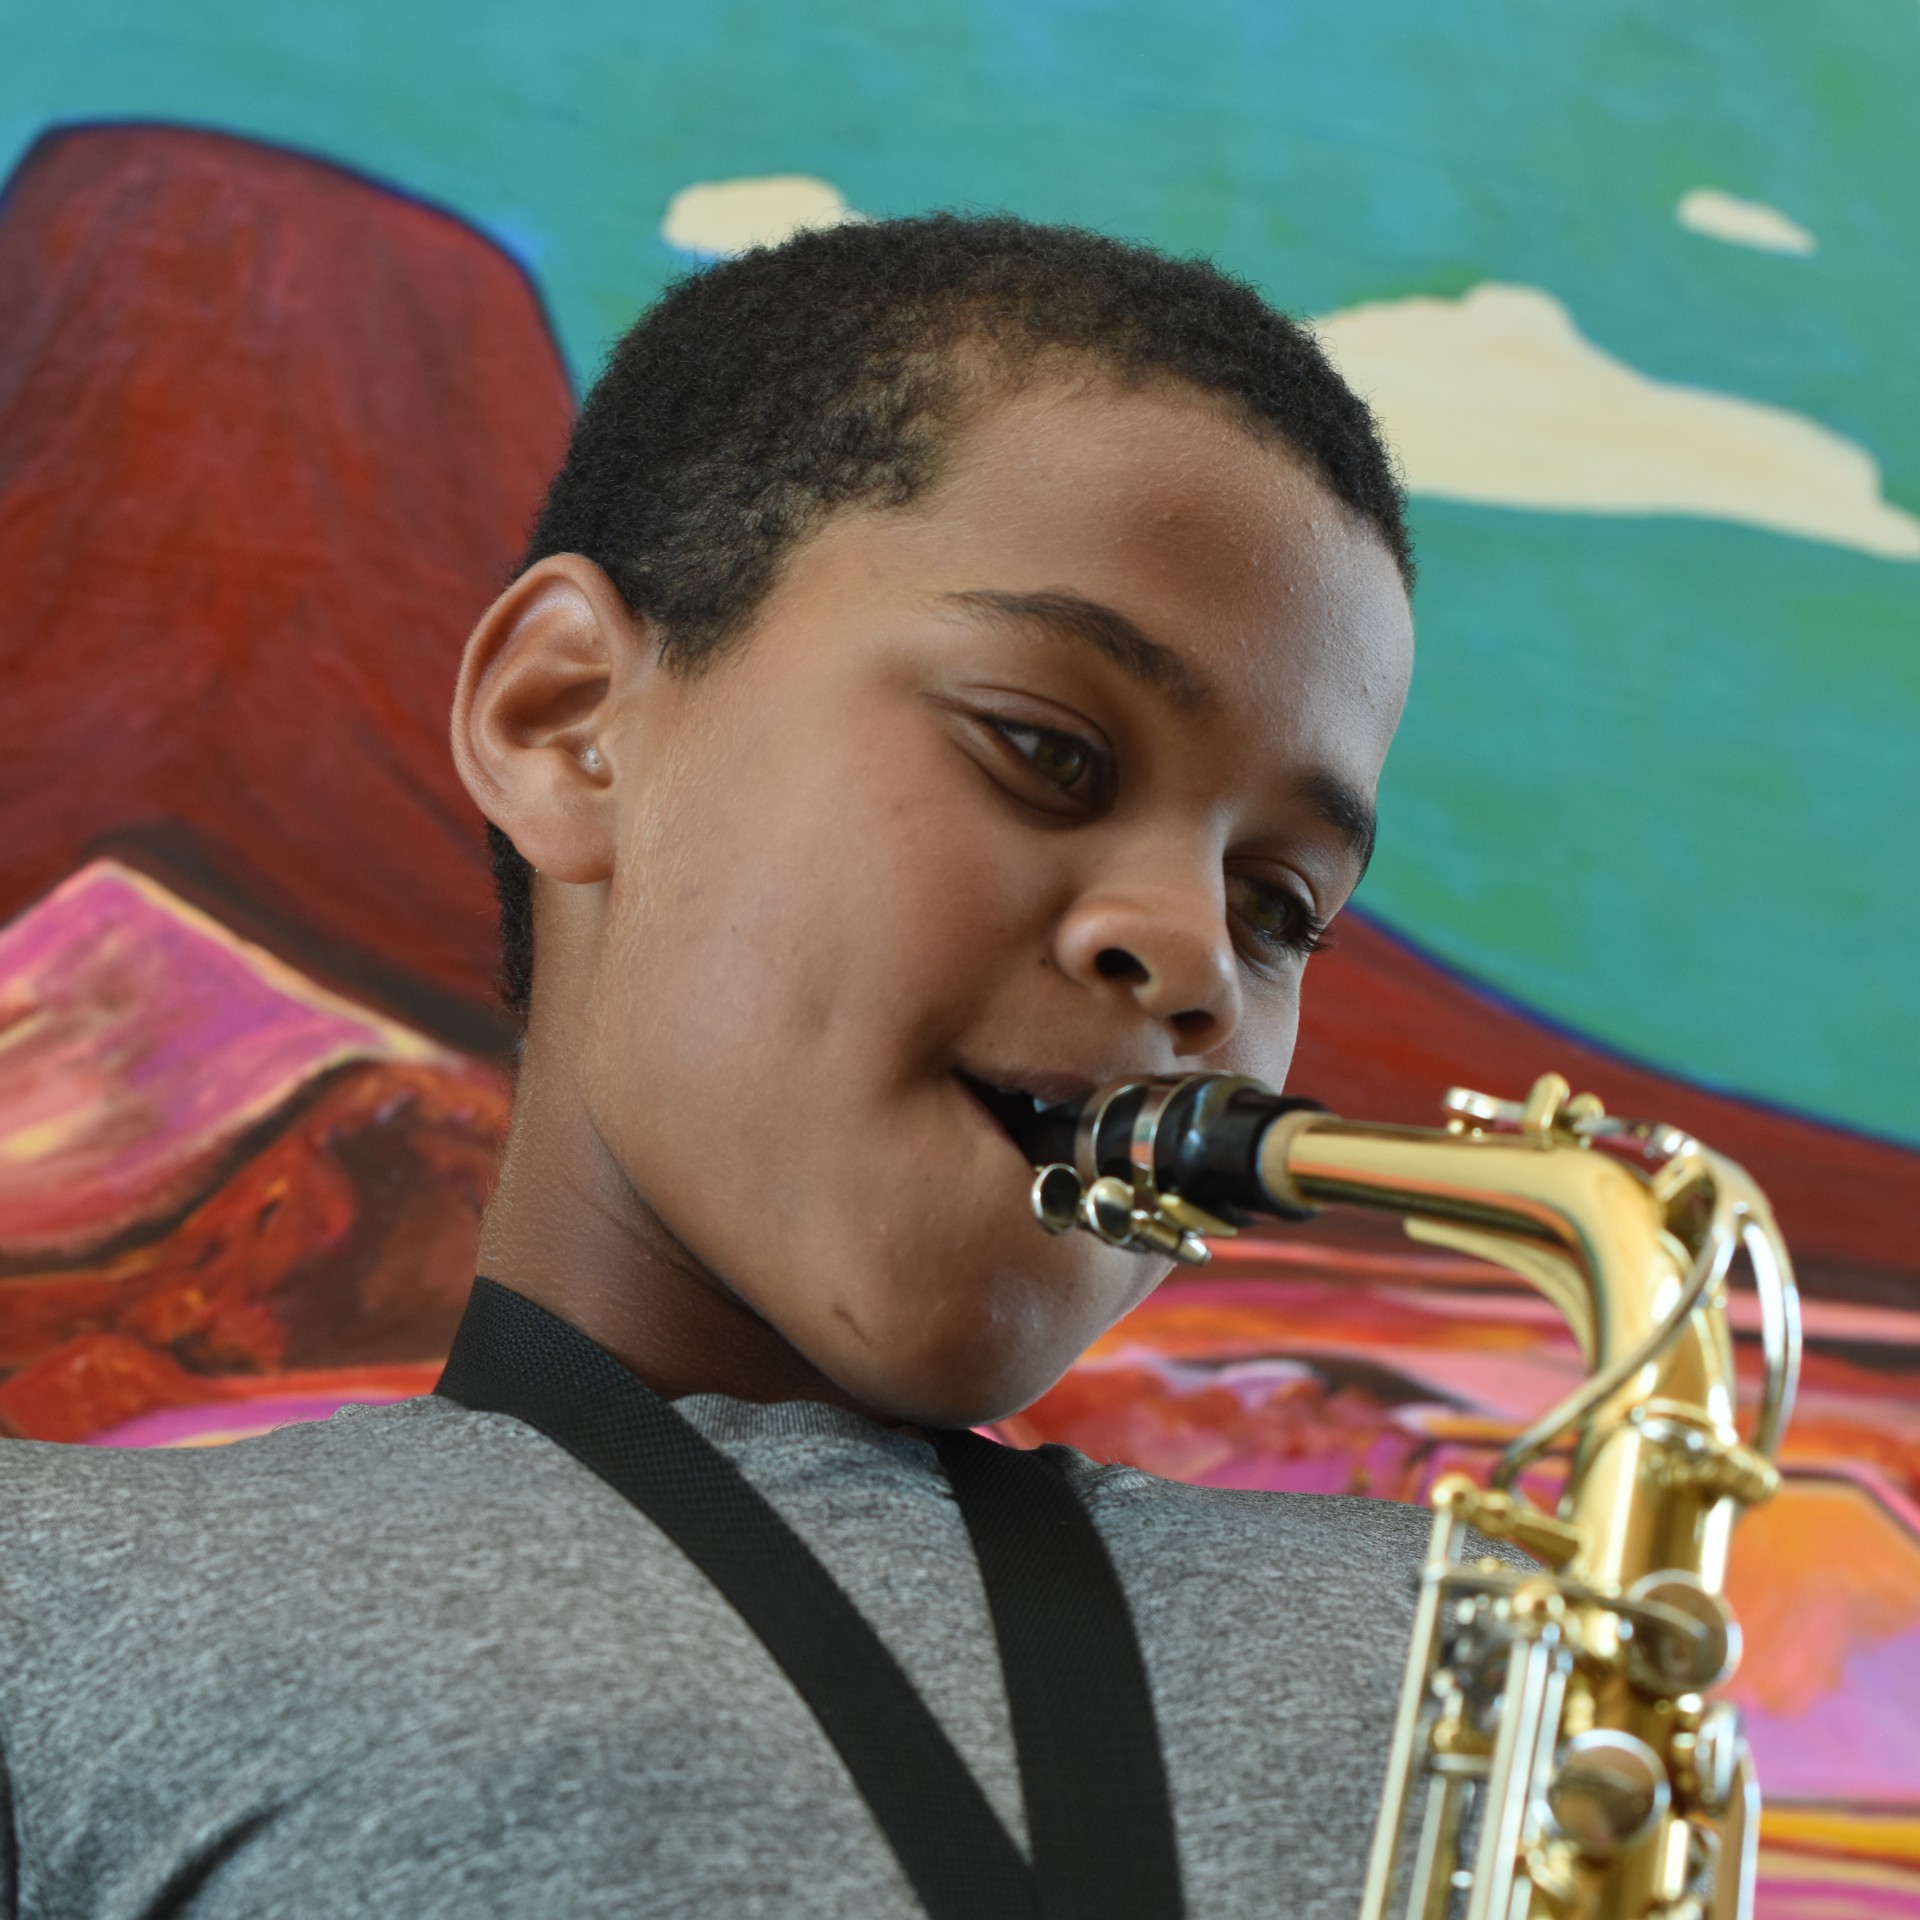 Student playing saxophone